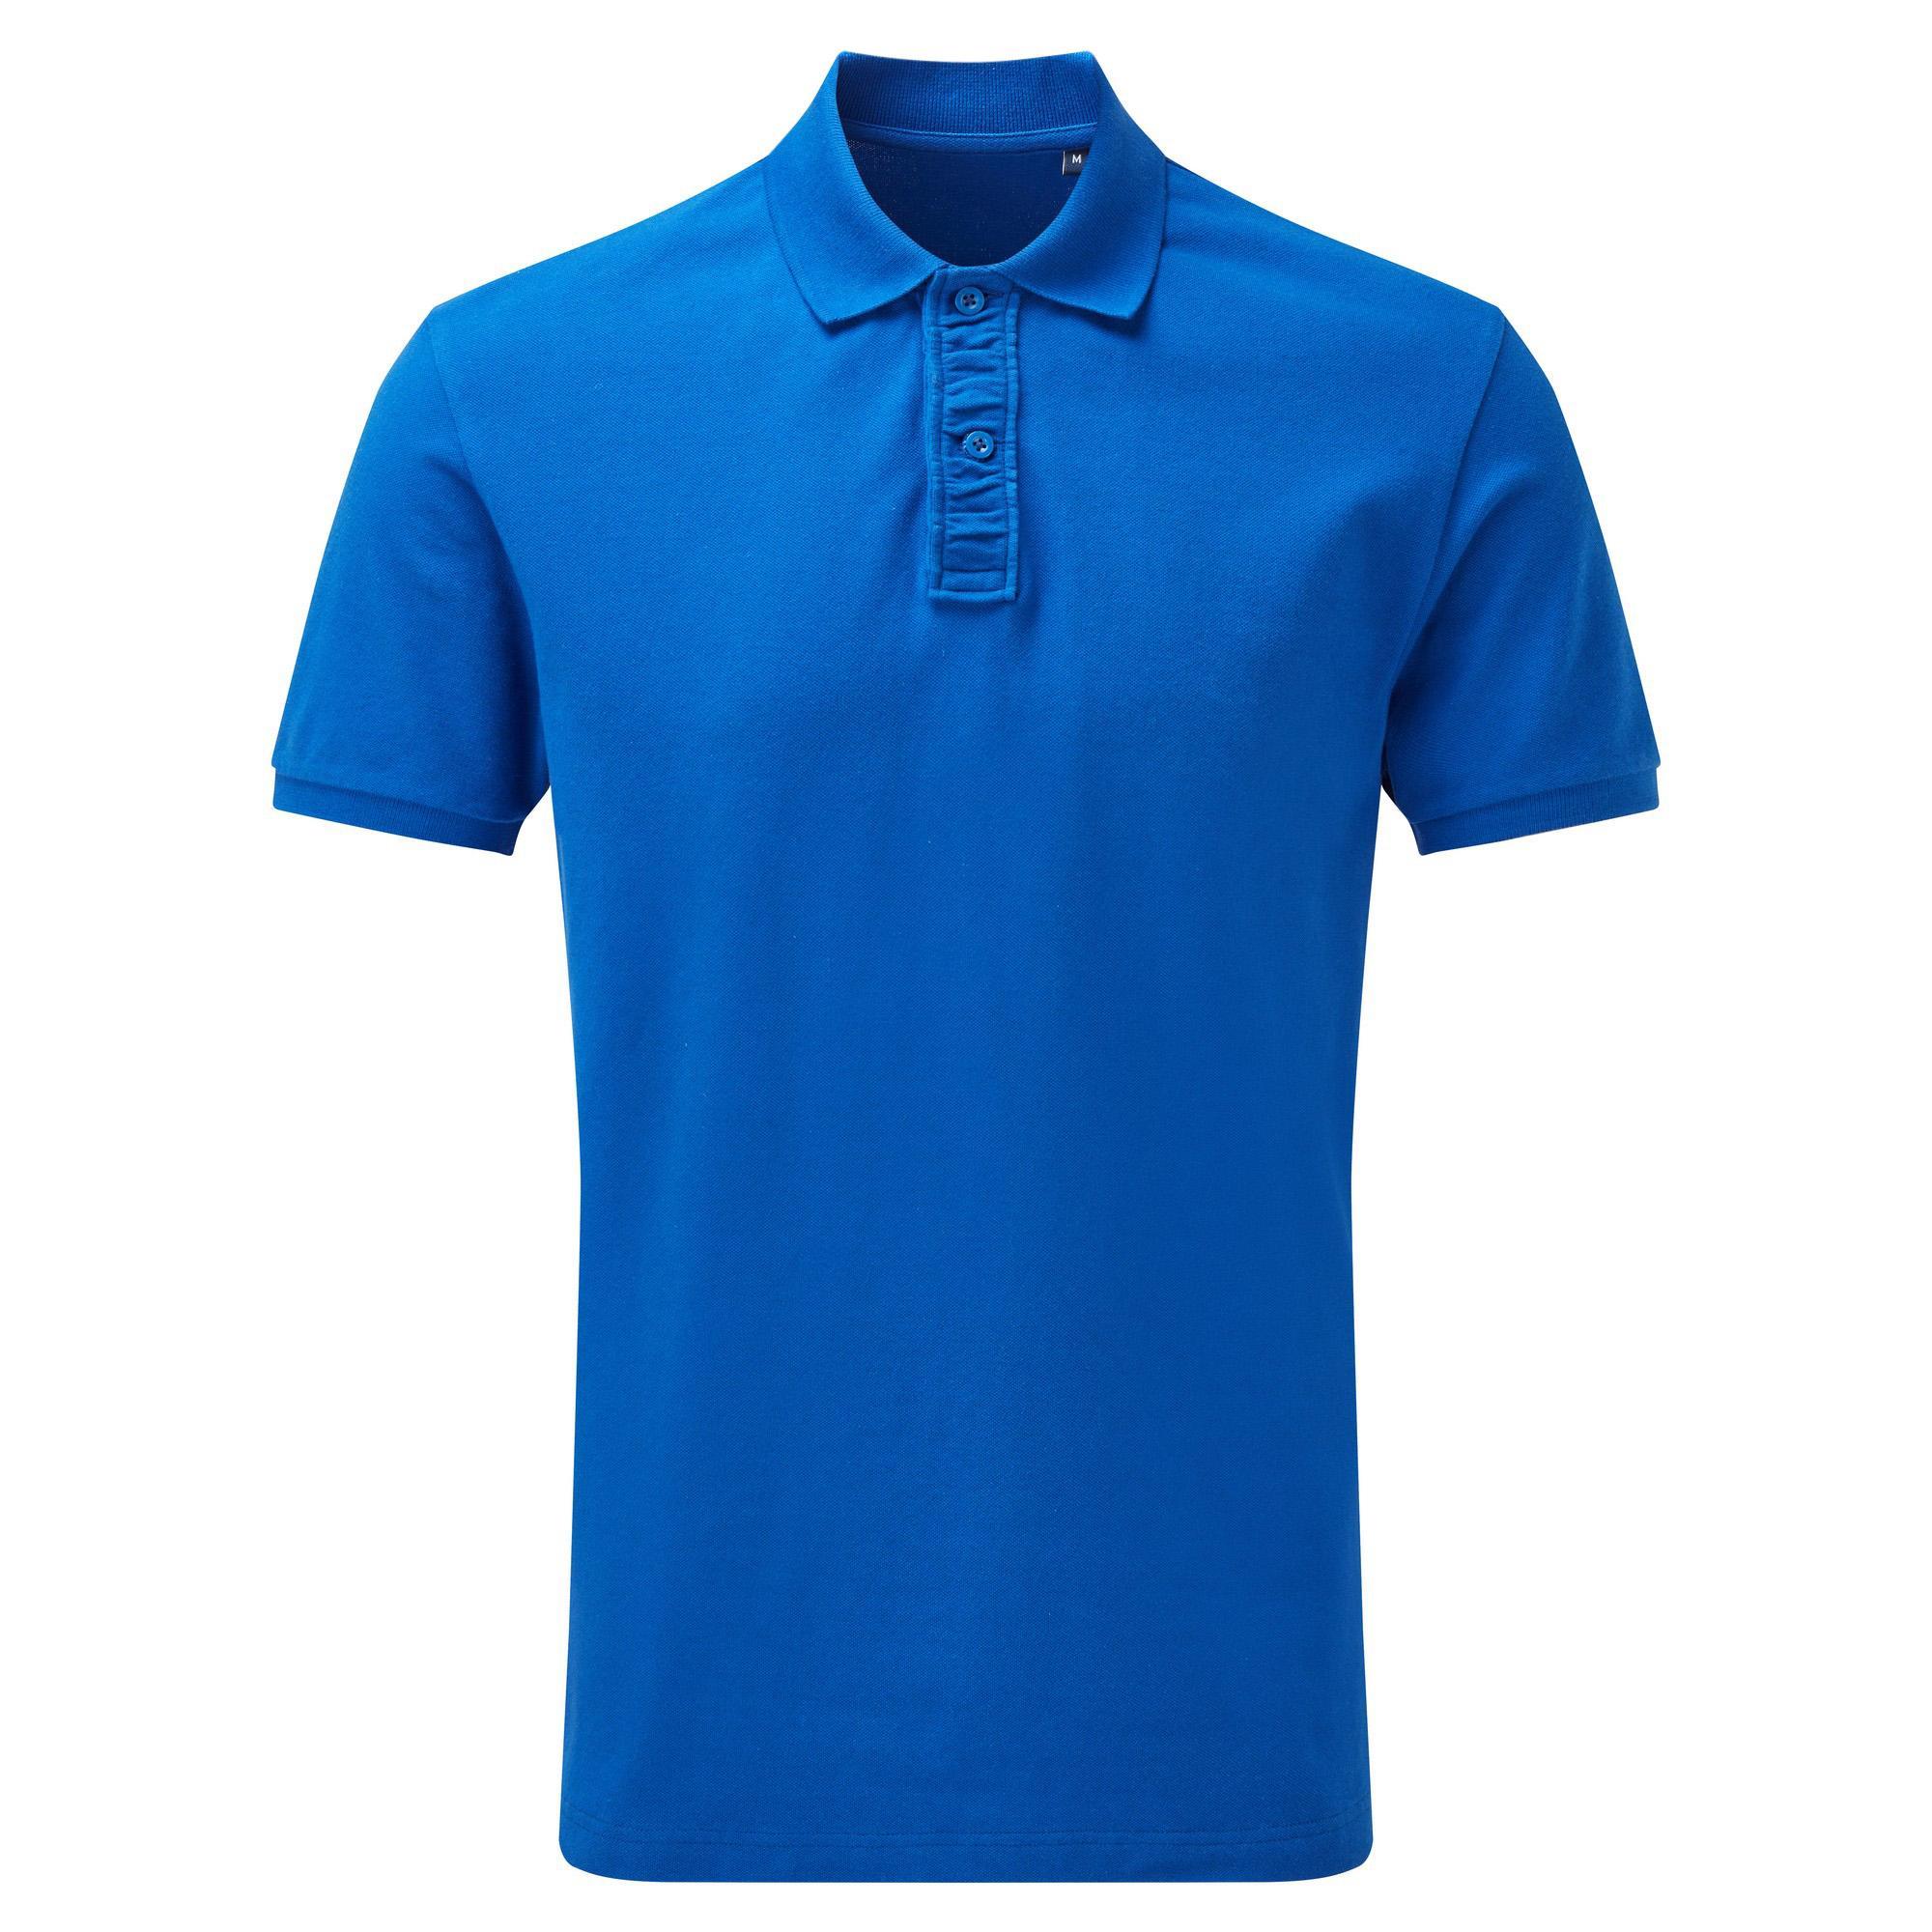 Asquith & Fox Mens Infinity Stretch Polo Shirt (Bright Royal Blue) (M)